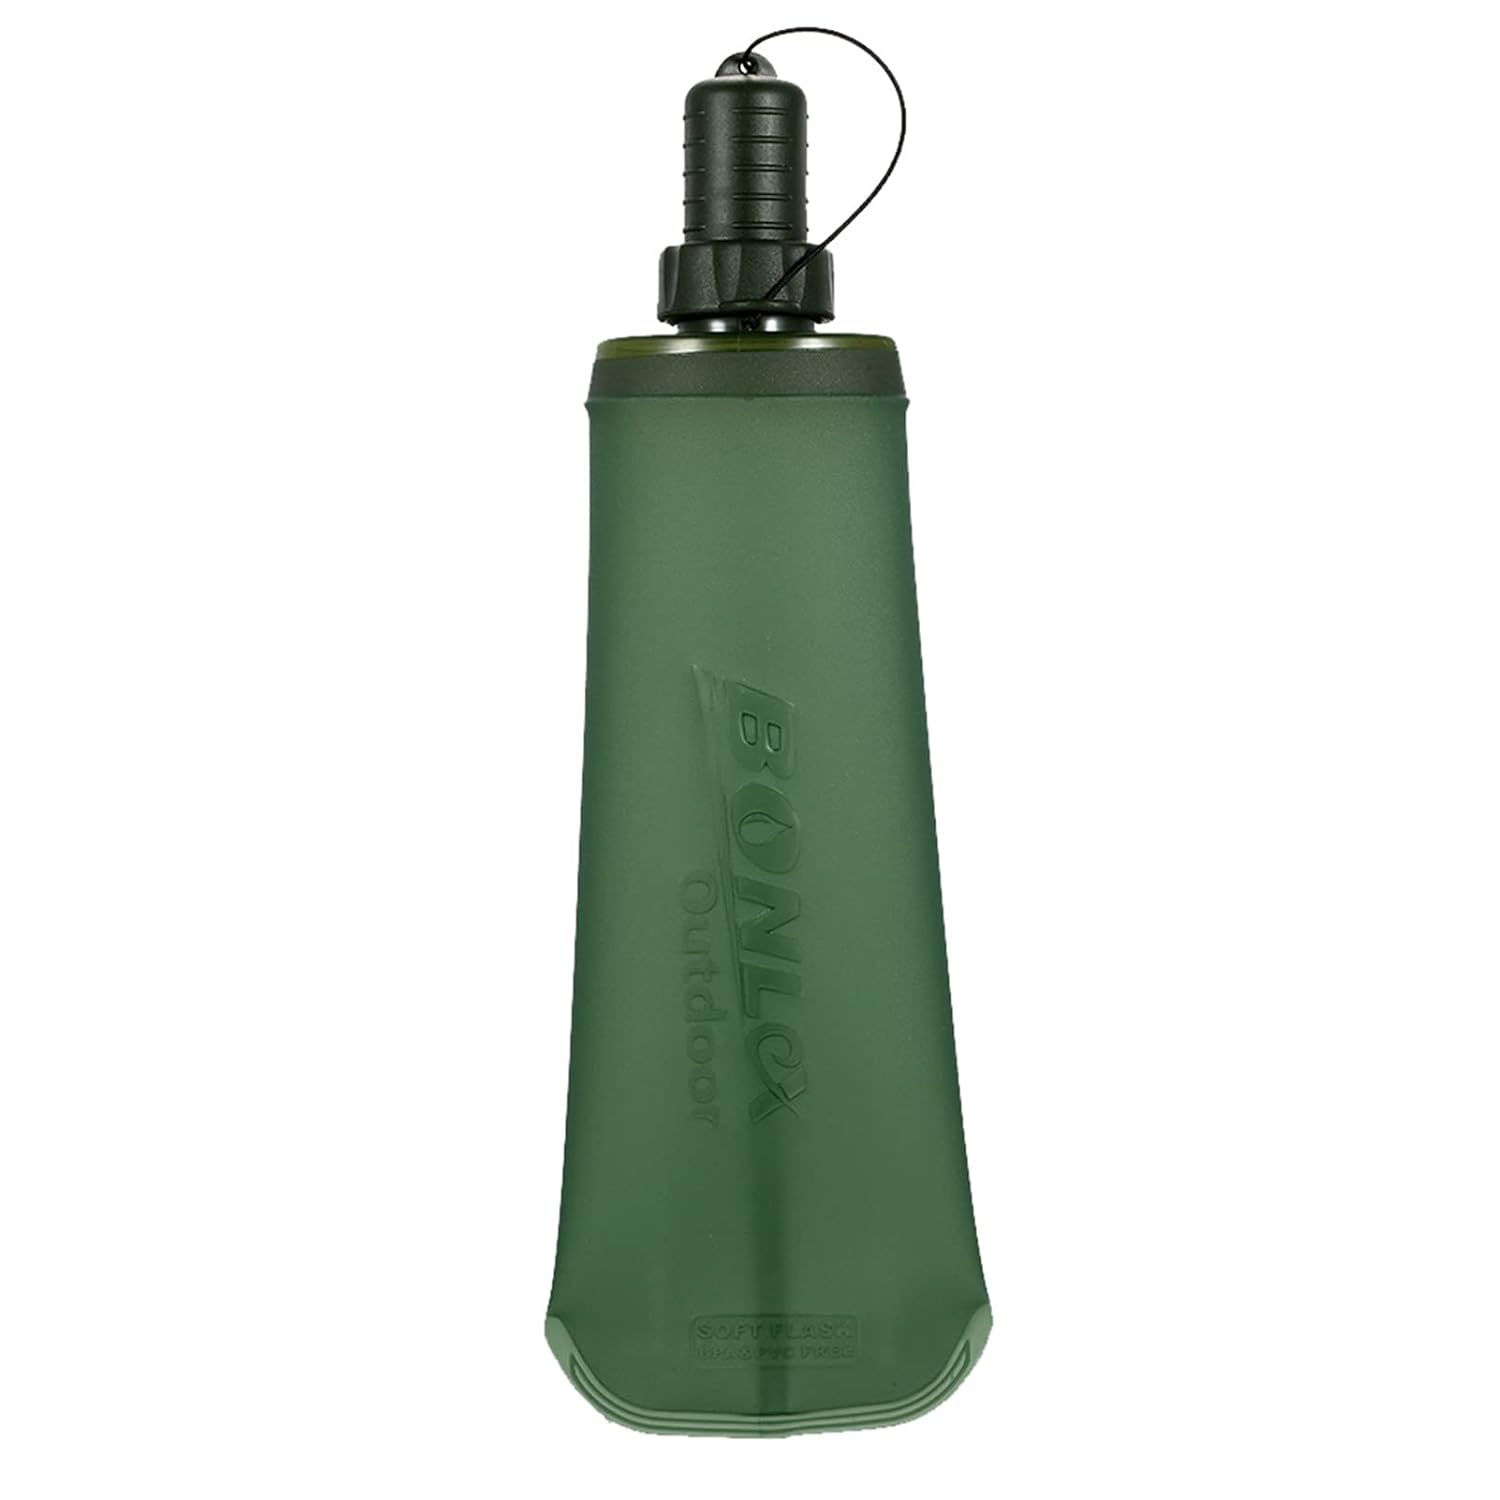 TPU Sport Water Bottle Folding Soft Flask Camping Water Bag 500ml